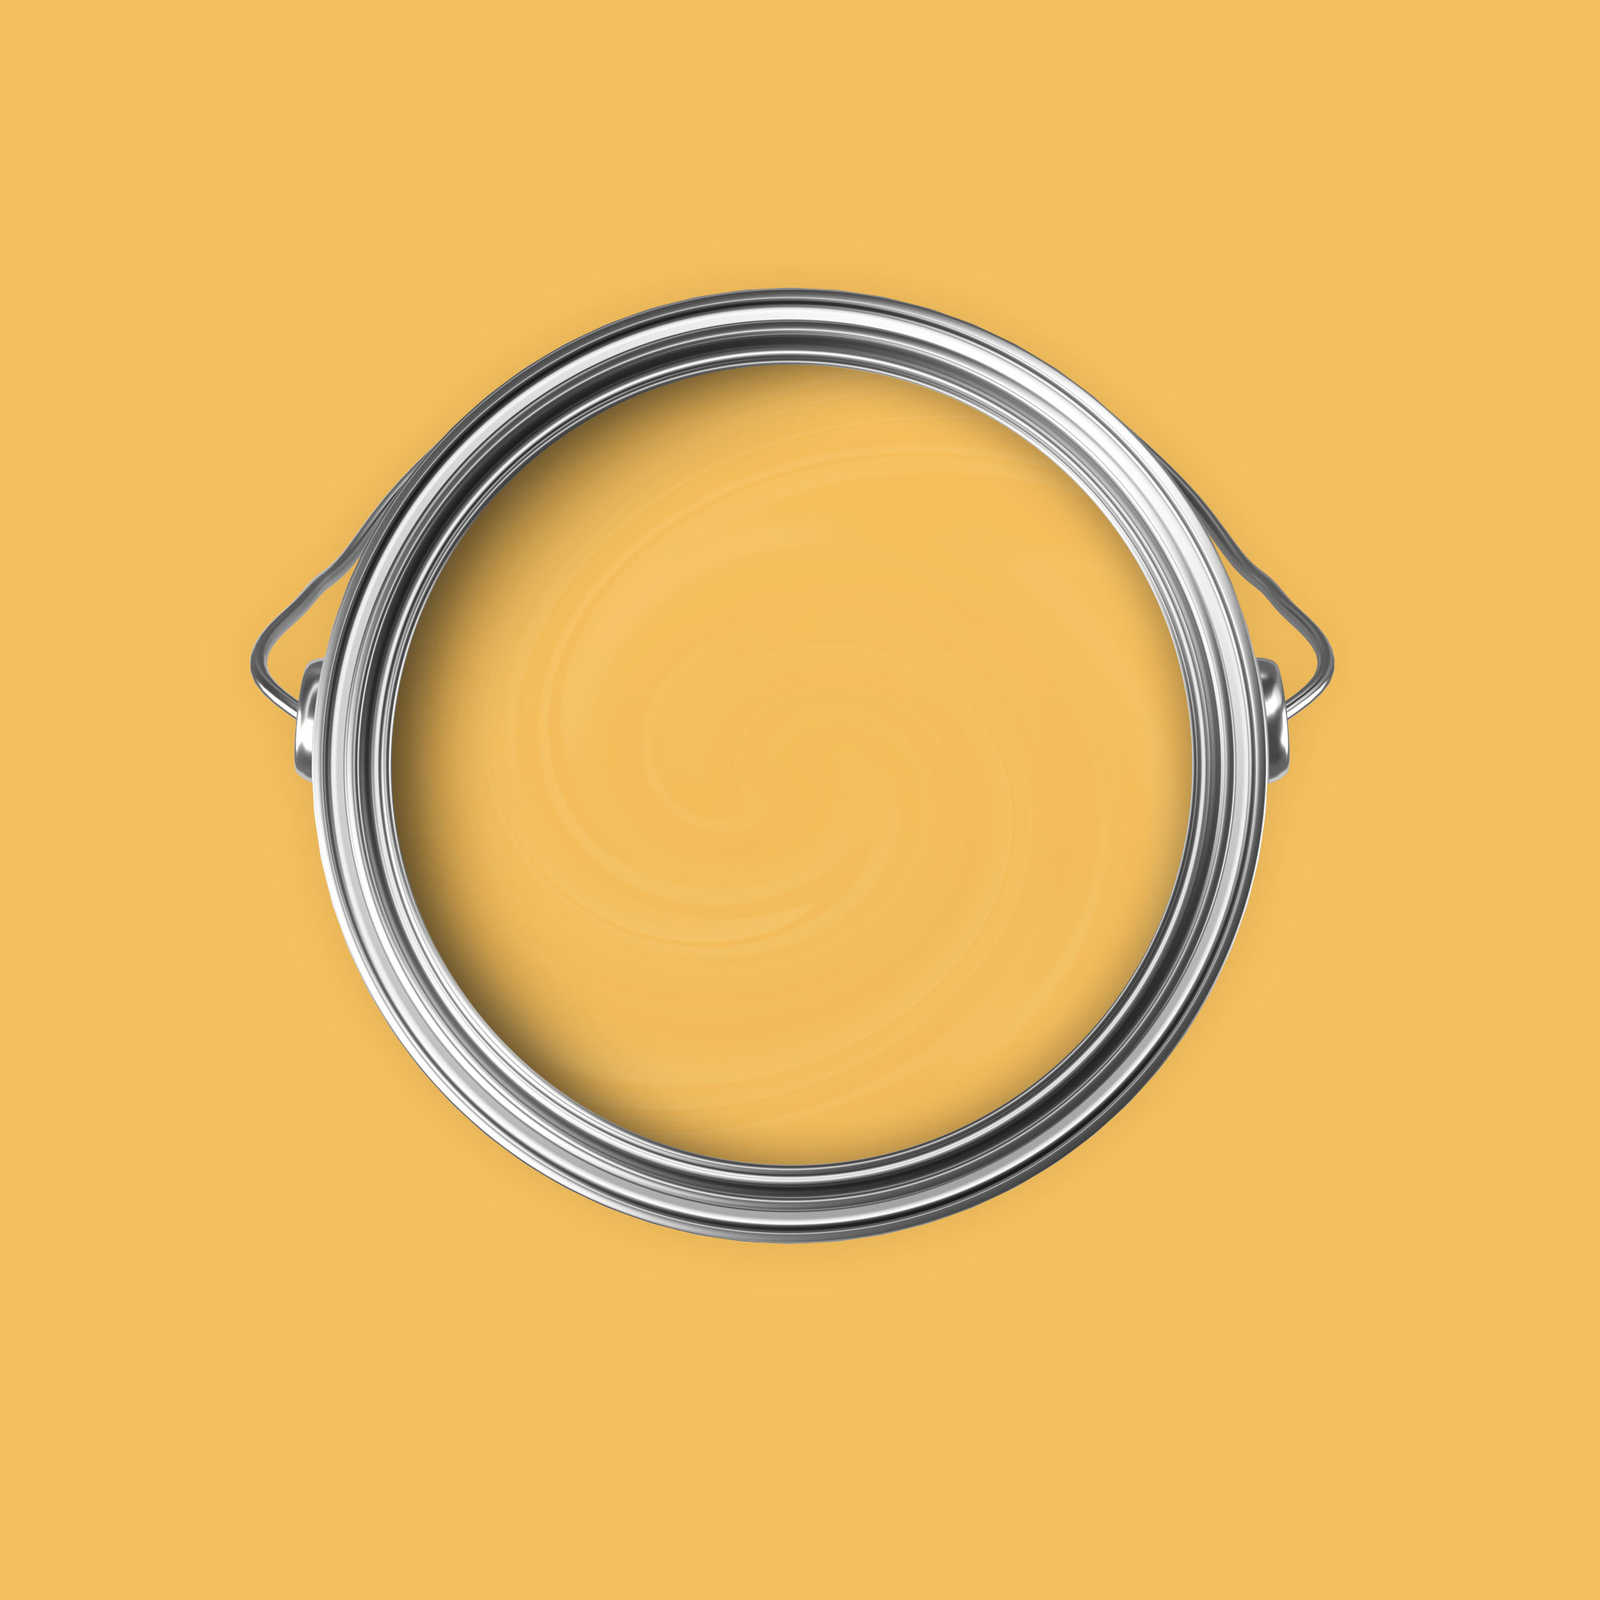             Premium Wandfarbe anregendes Sonnengelb »Juicy Yellow« NW805 – 5 Liter
        